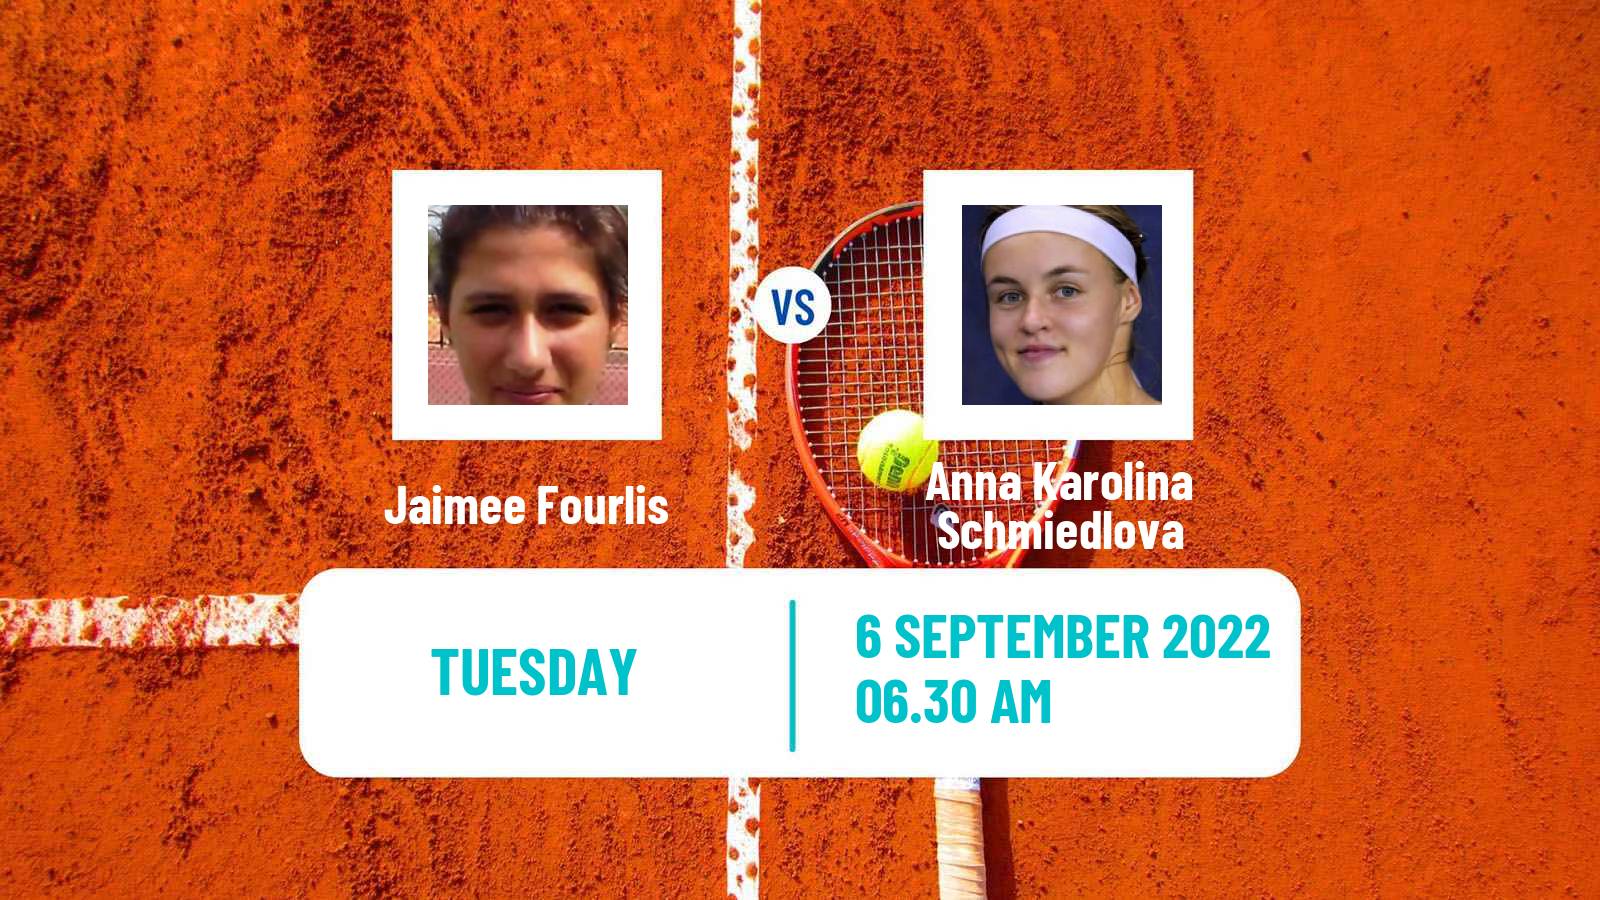 Tennis ATP Challenger Jaimee Fourlis - Anna Karolina Schmiedlova